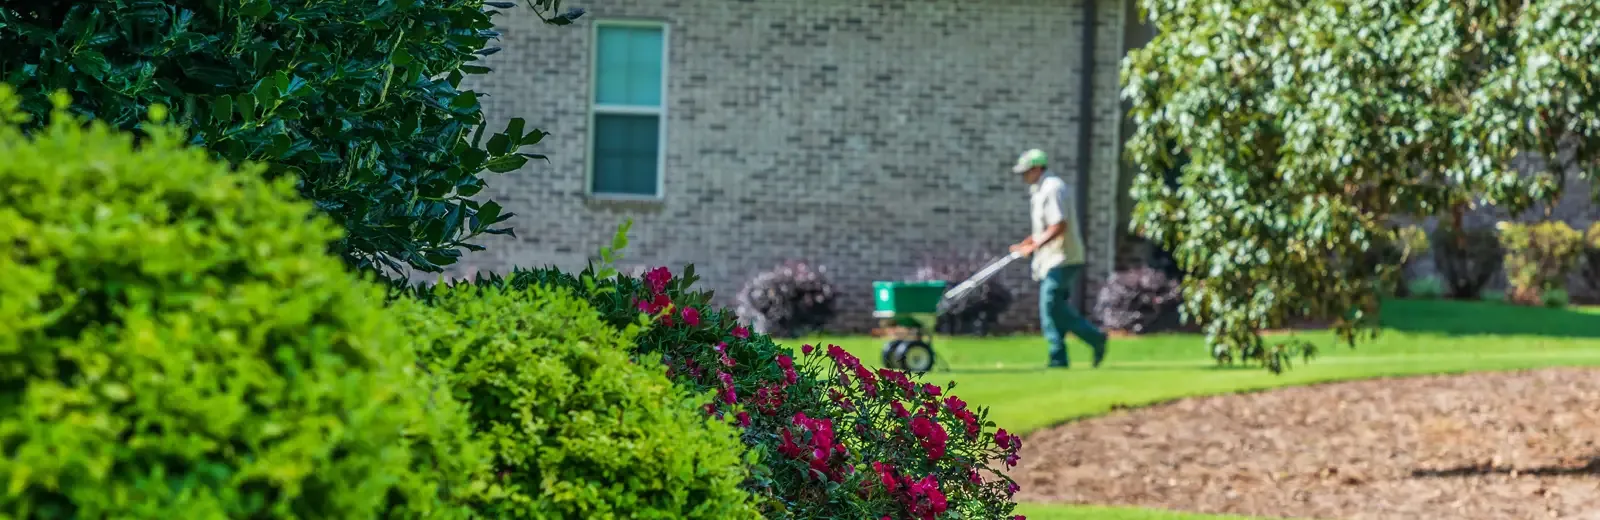 lawn care service, fertilizing lawn